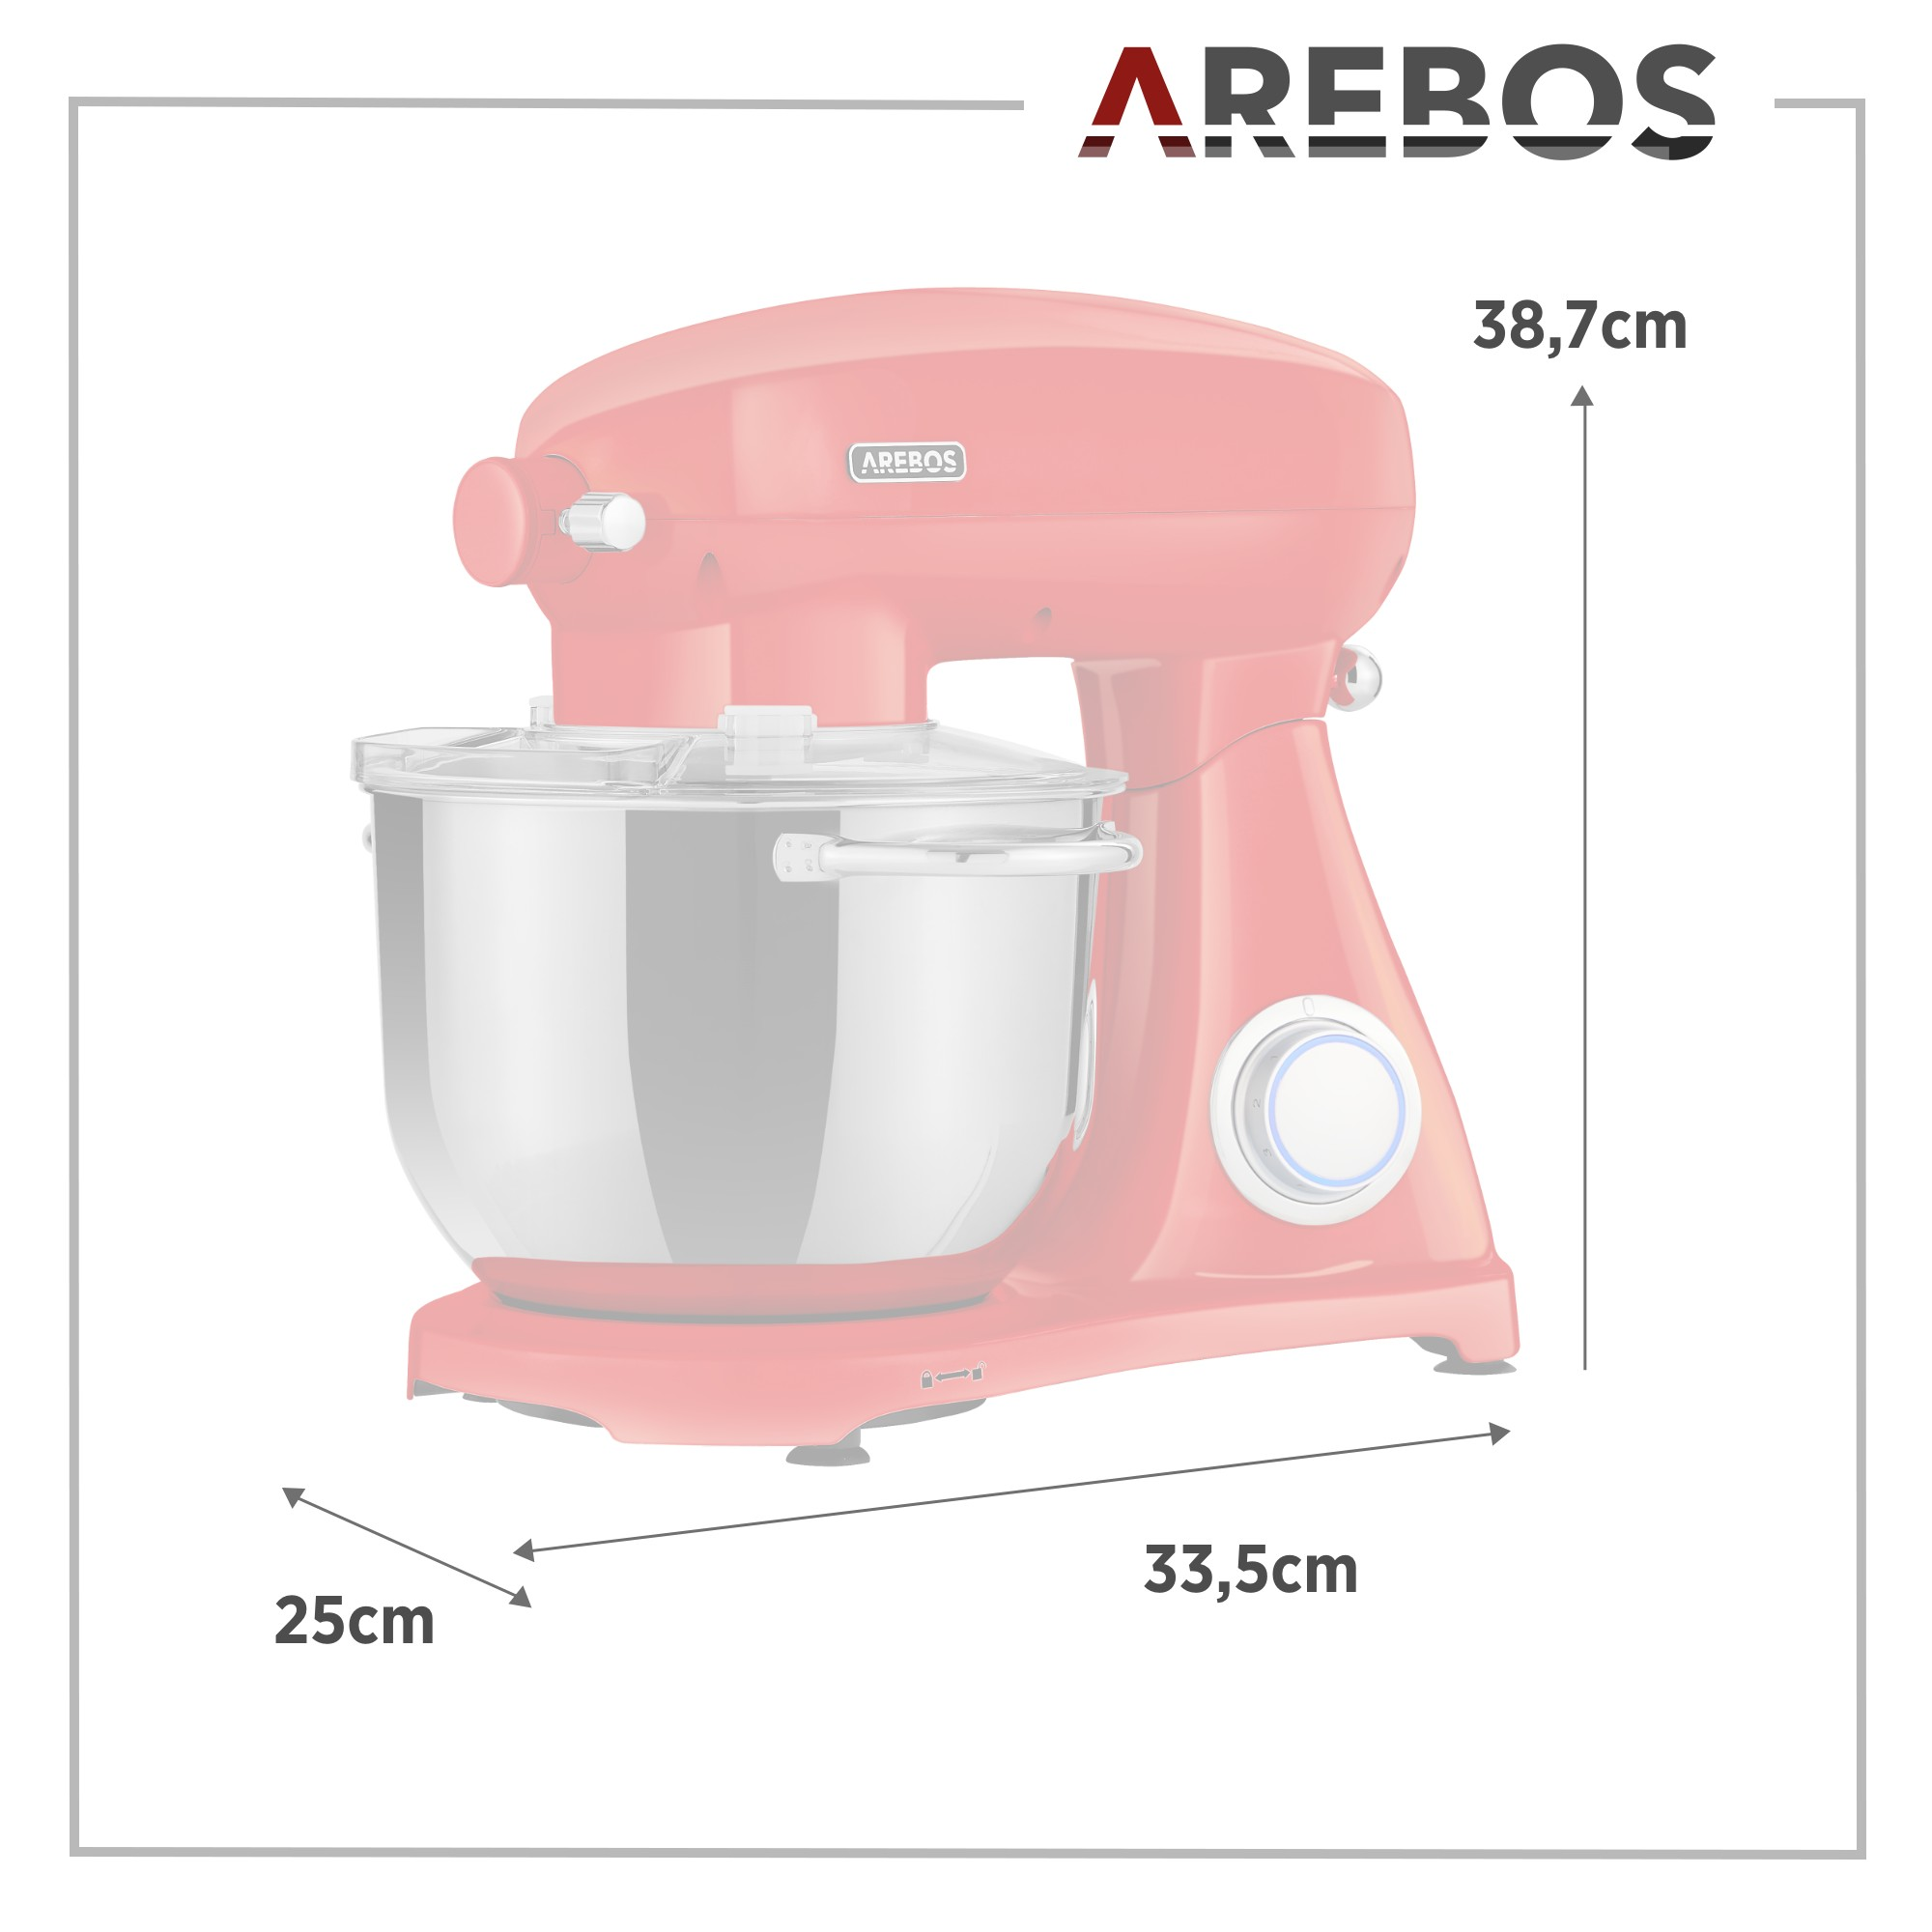 AREBOS 6 Speedlevels Küchenmaschine Watt) 1800 rot l, (Rührschüsselkapazität: 6